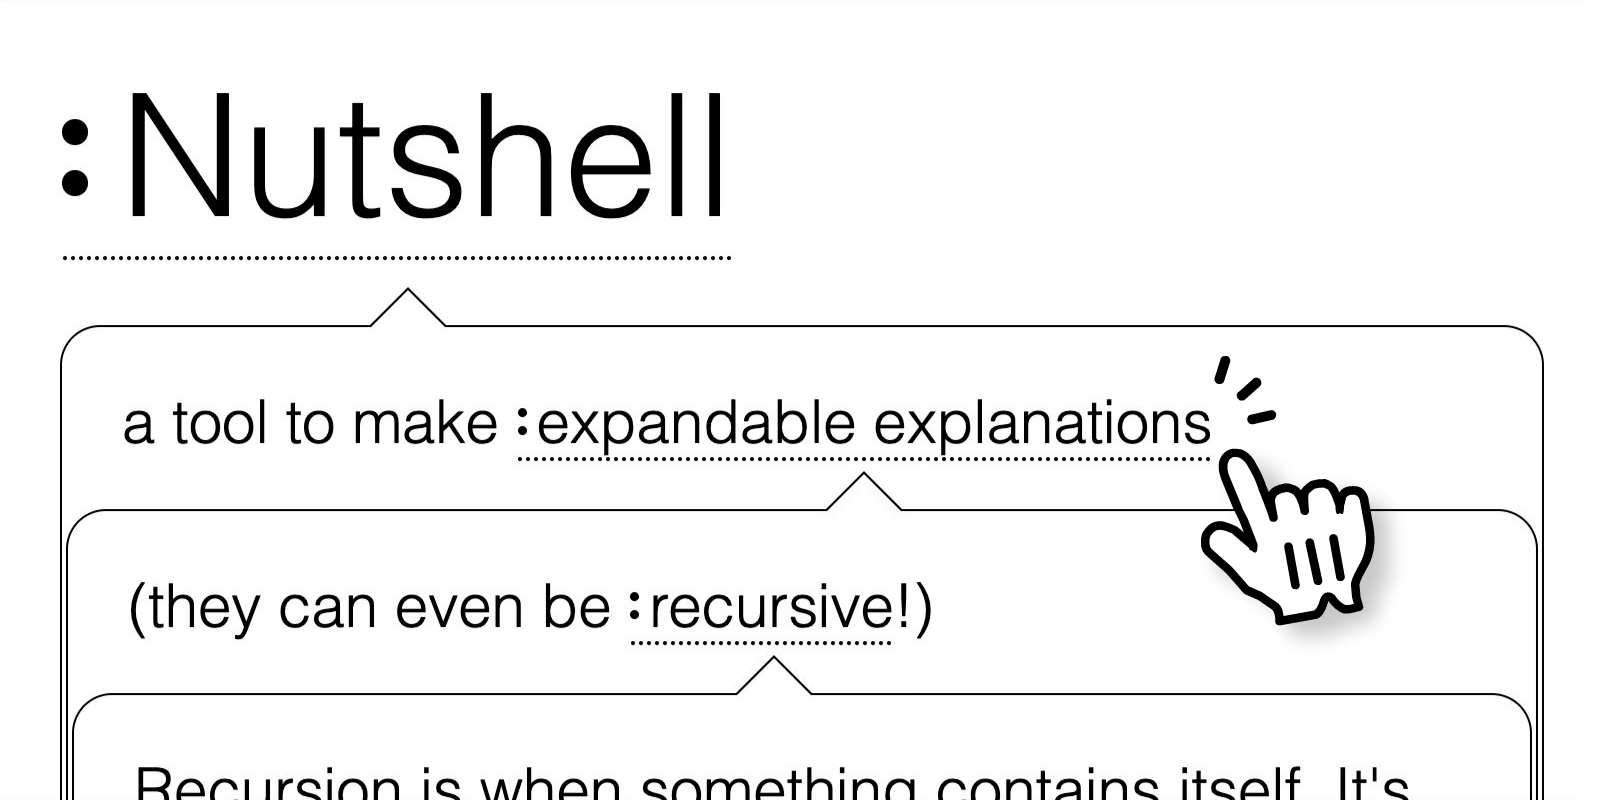 Nutshell: make expandable explanations